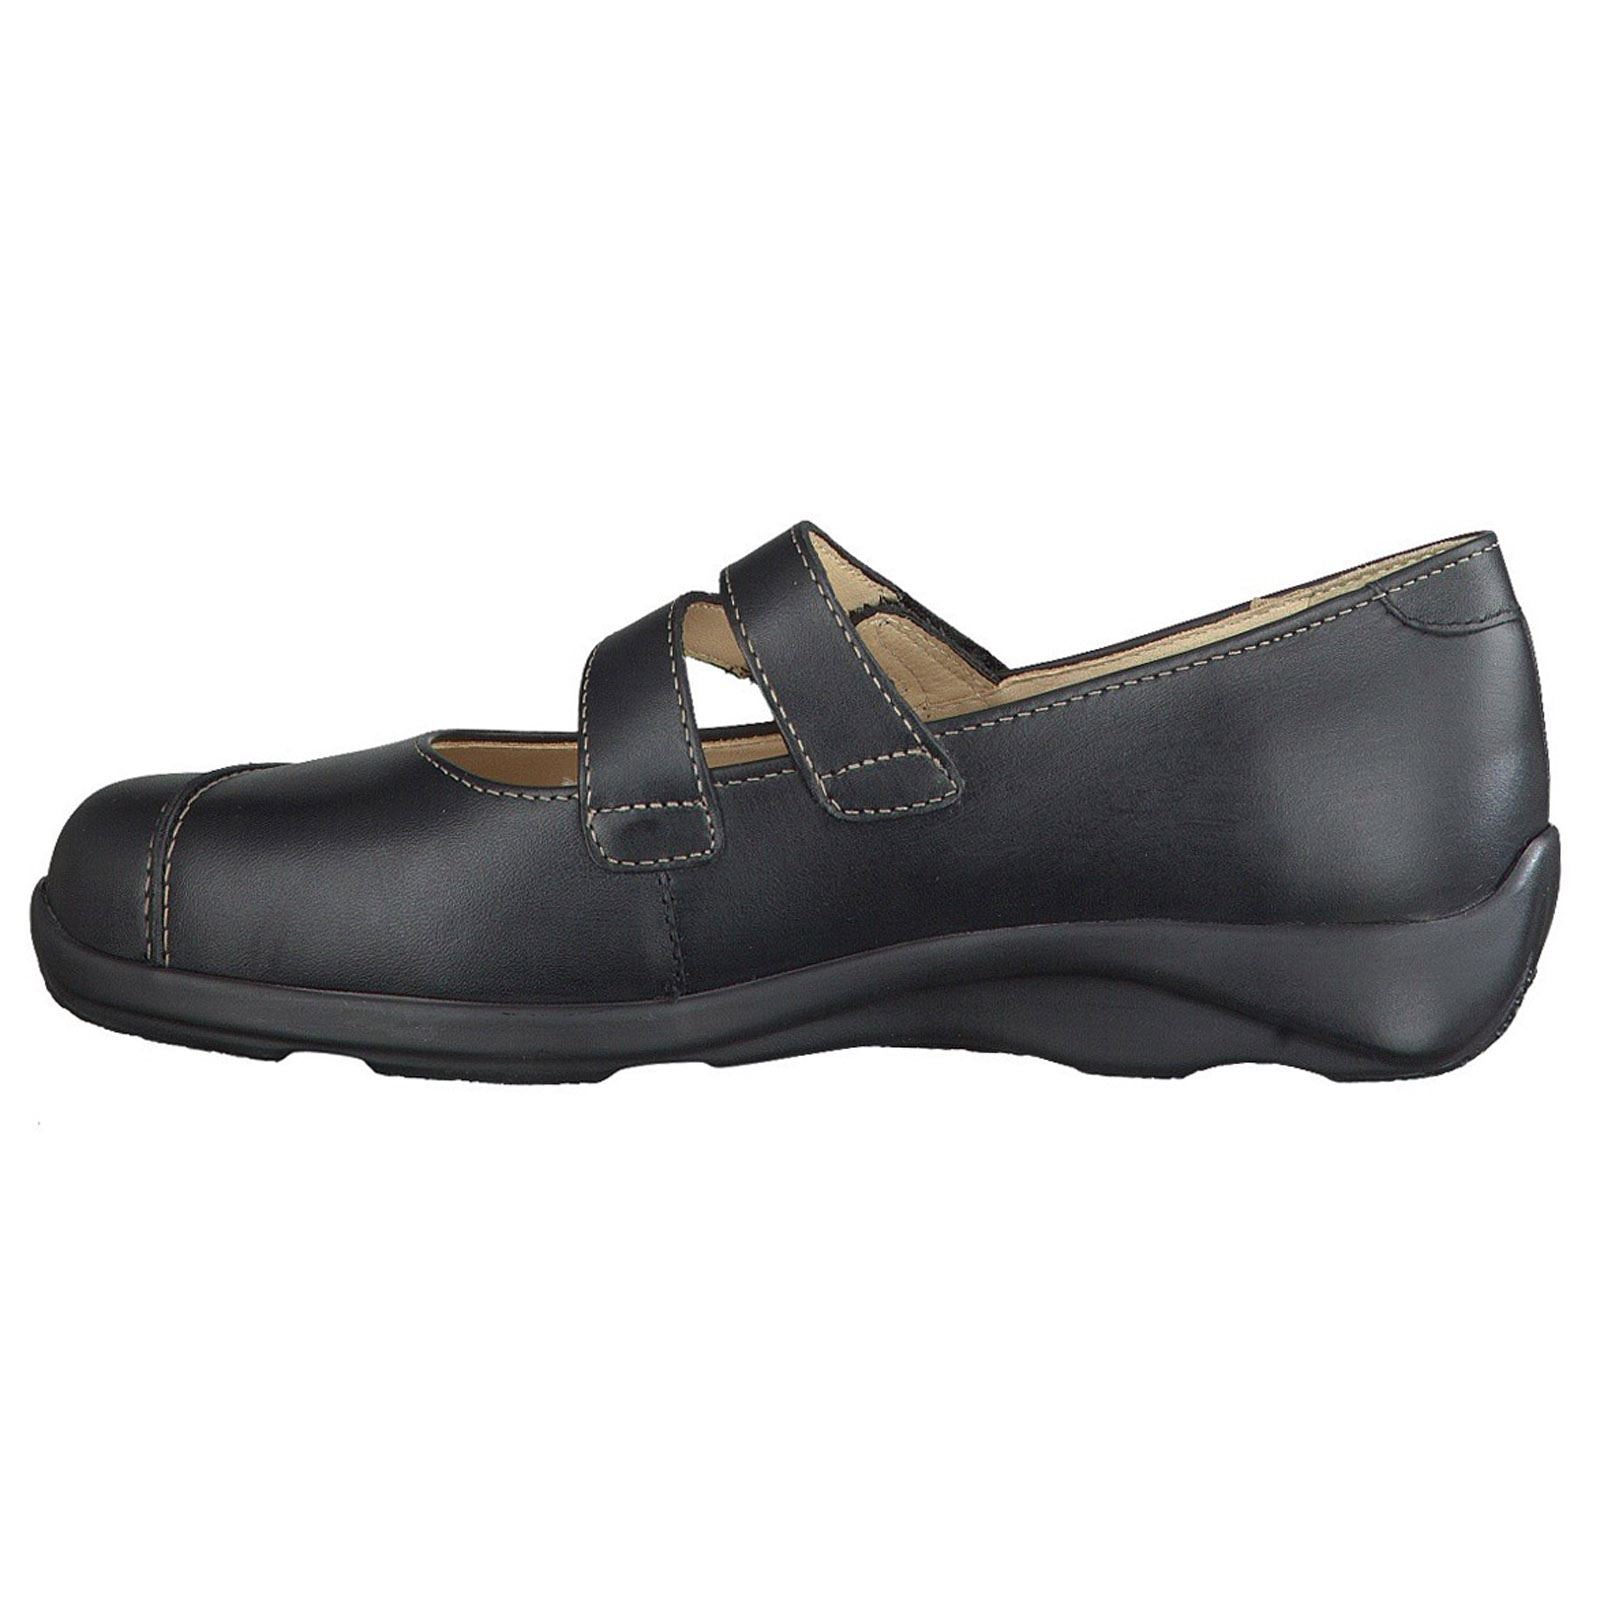 Finn Comfort Vivero 2353 Black Womens Mary Jane Shoes - UK 5